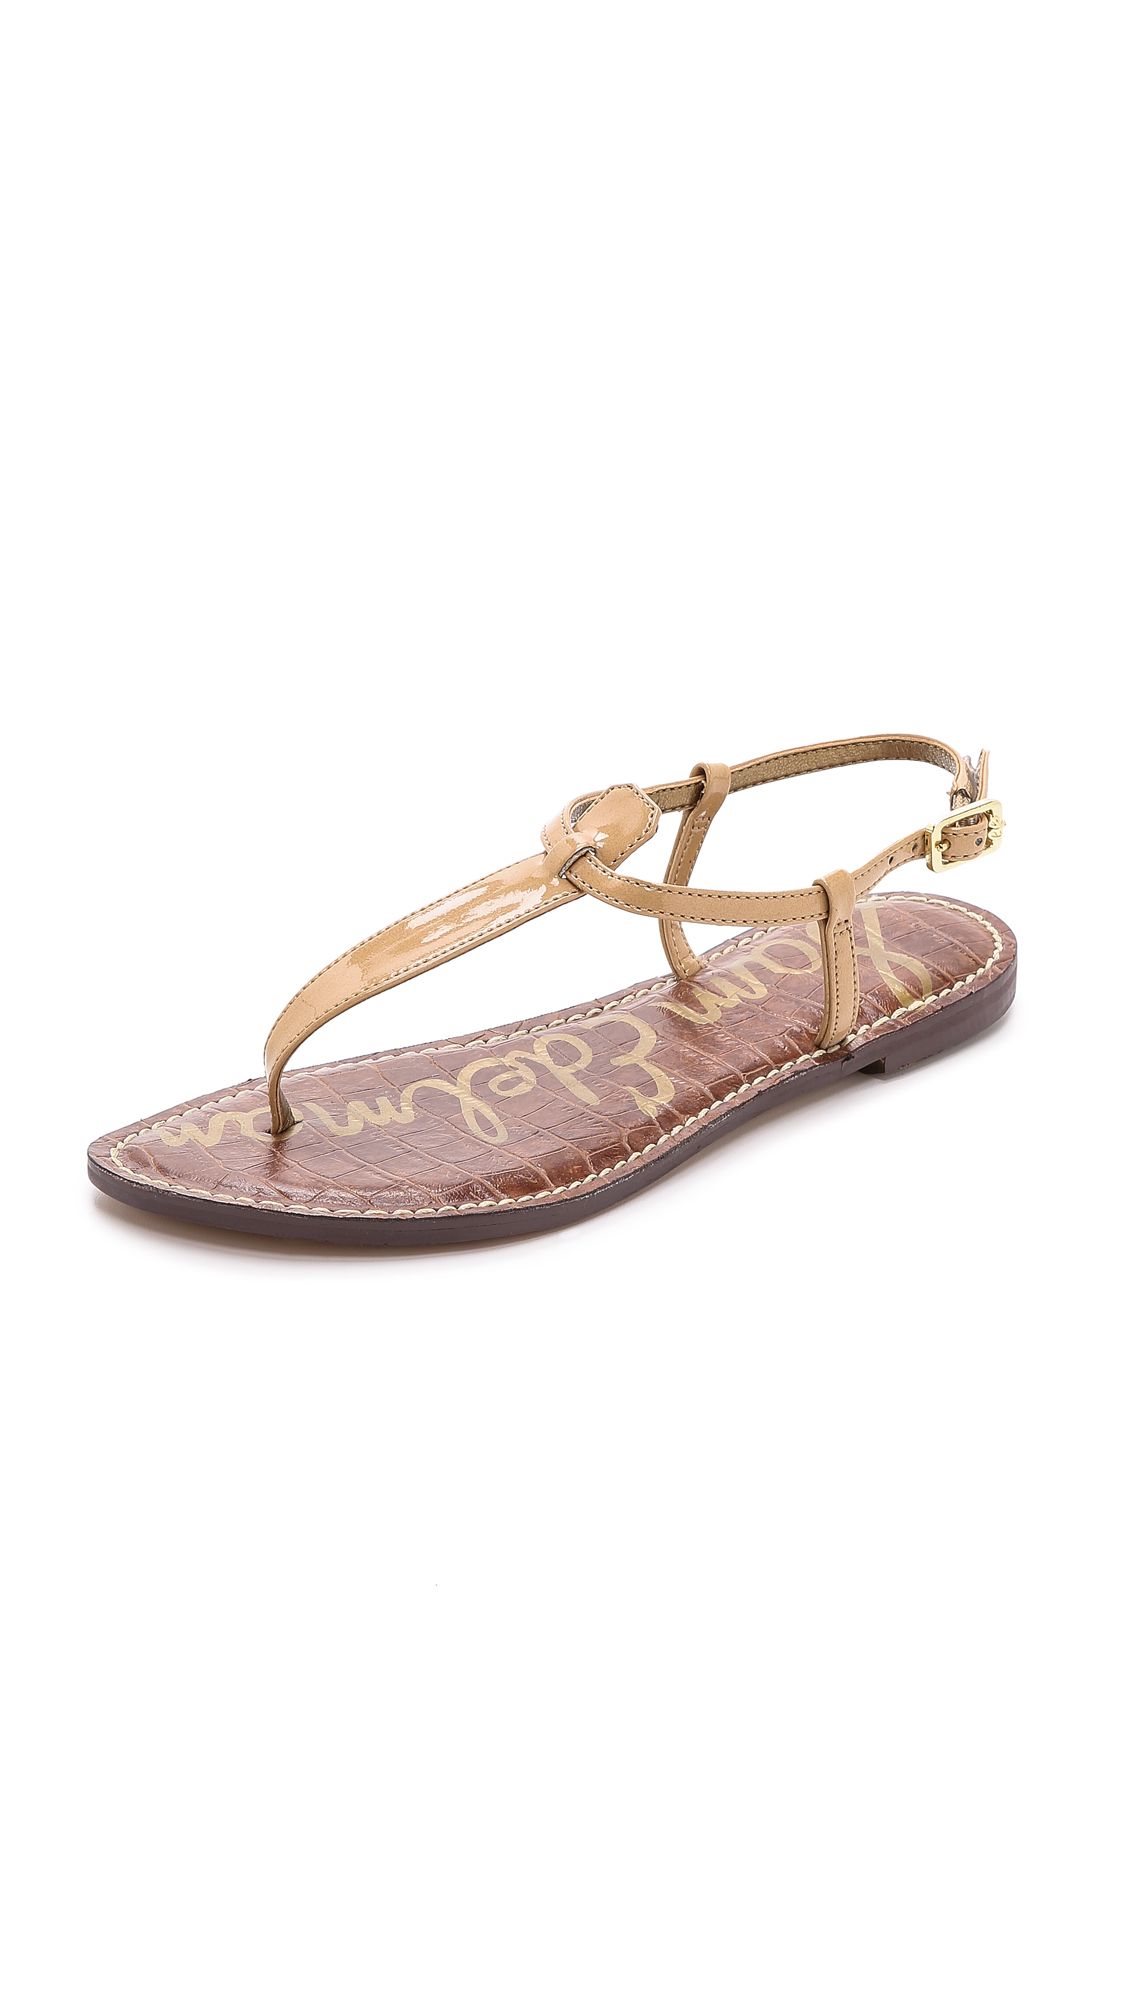 Sam Edelman Gigi Patent T Strap Sandals - Almond | Shopbop